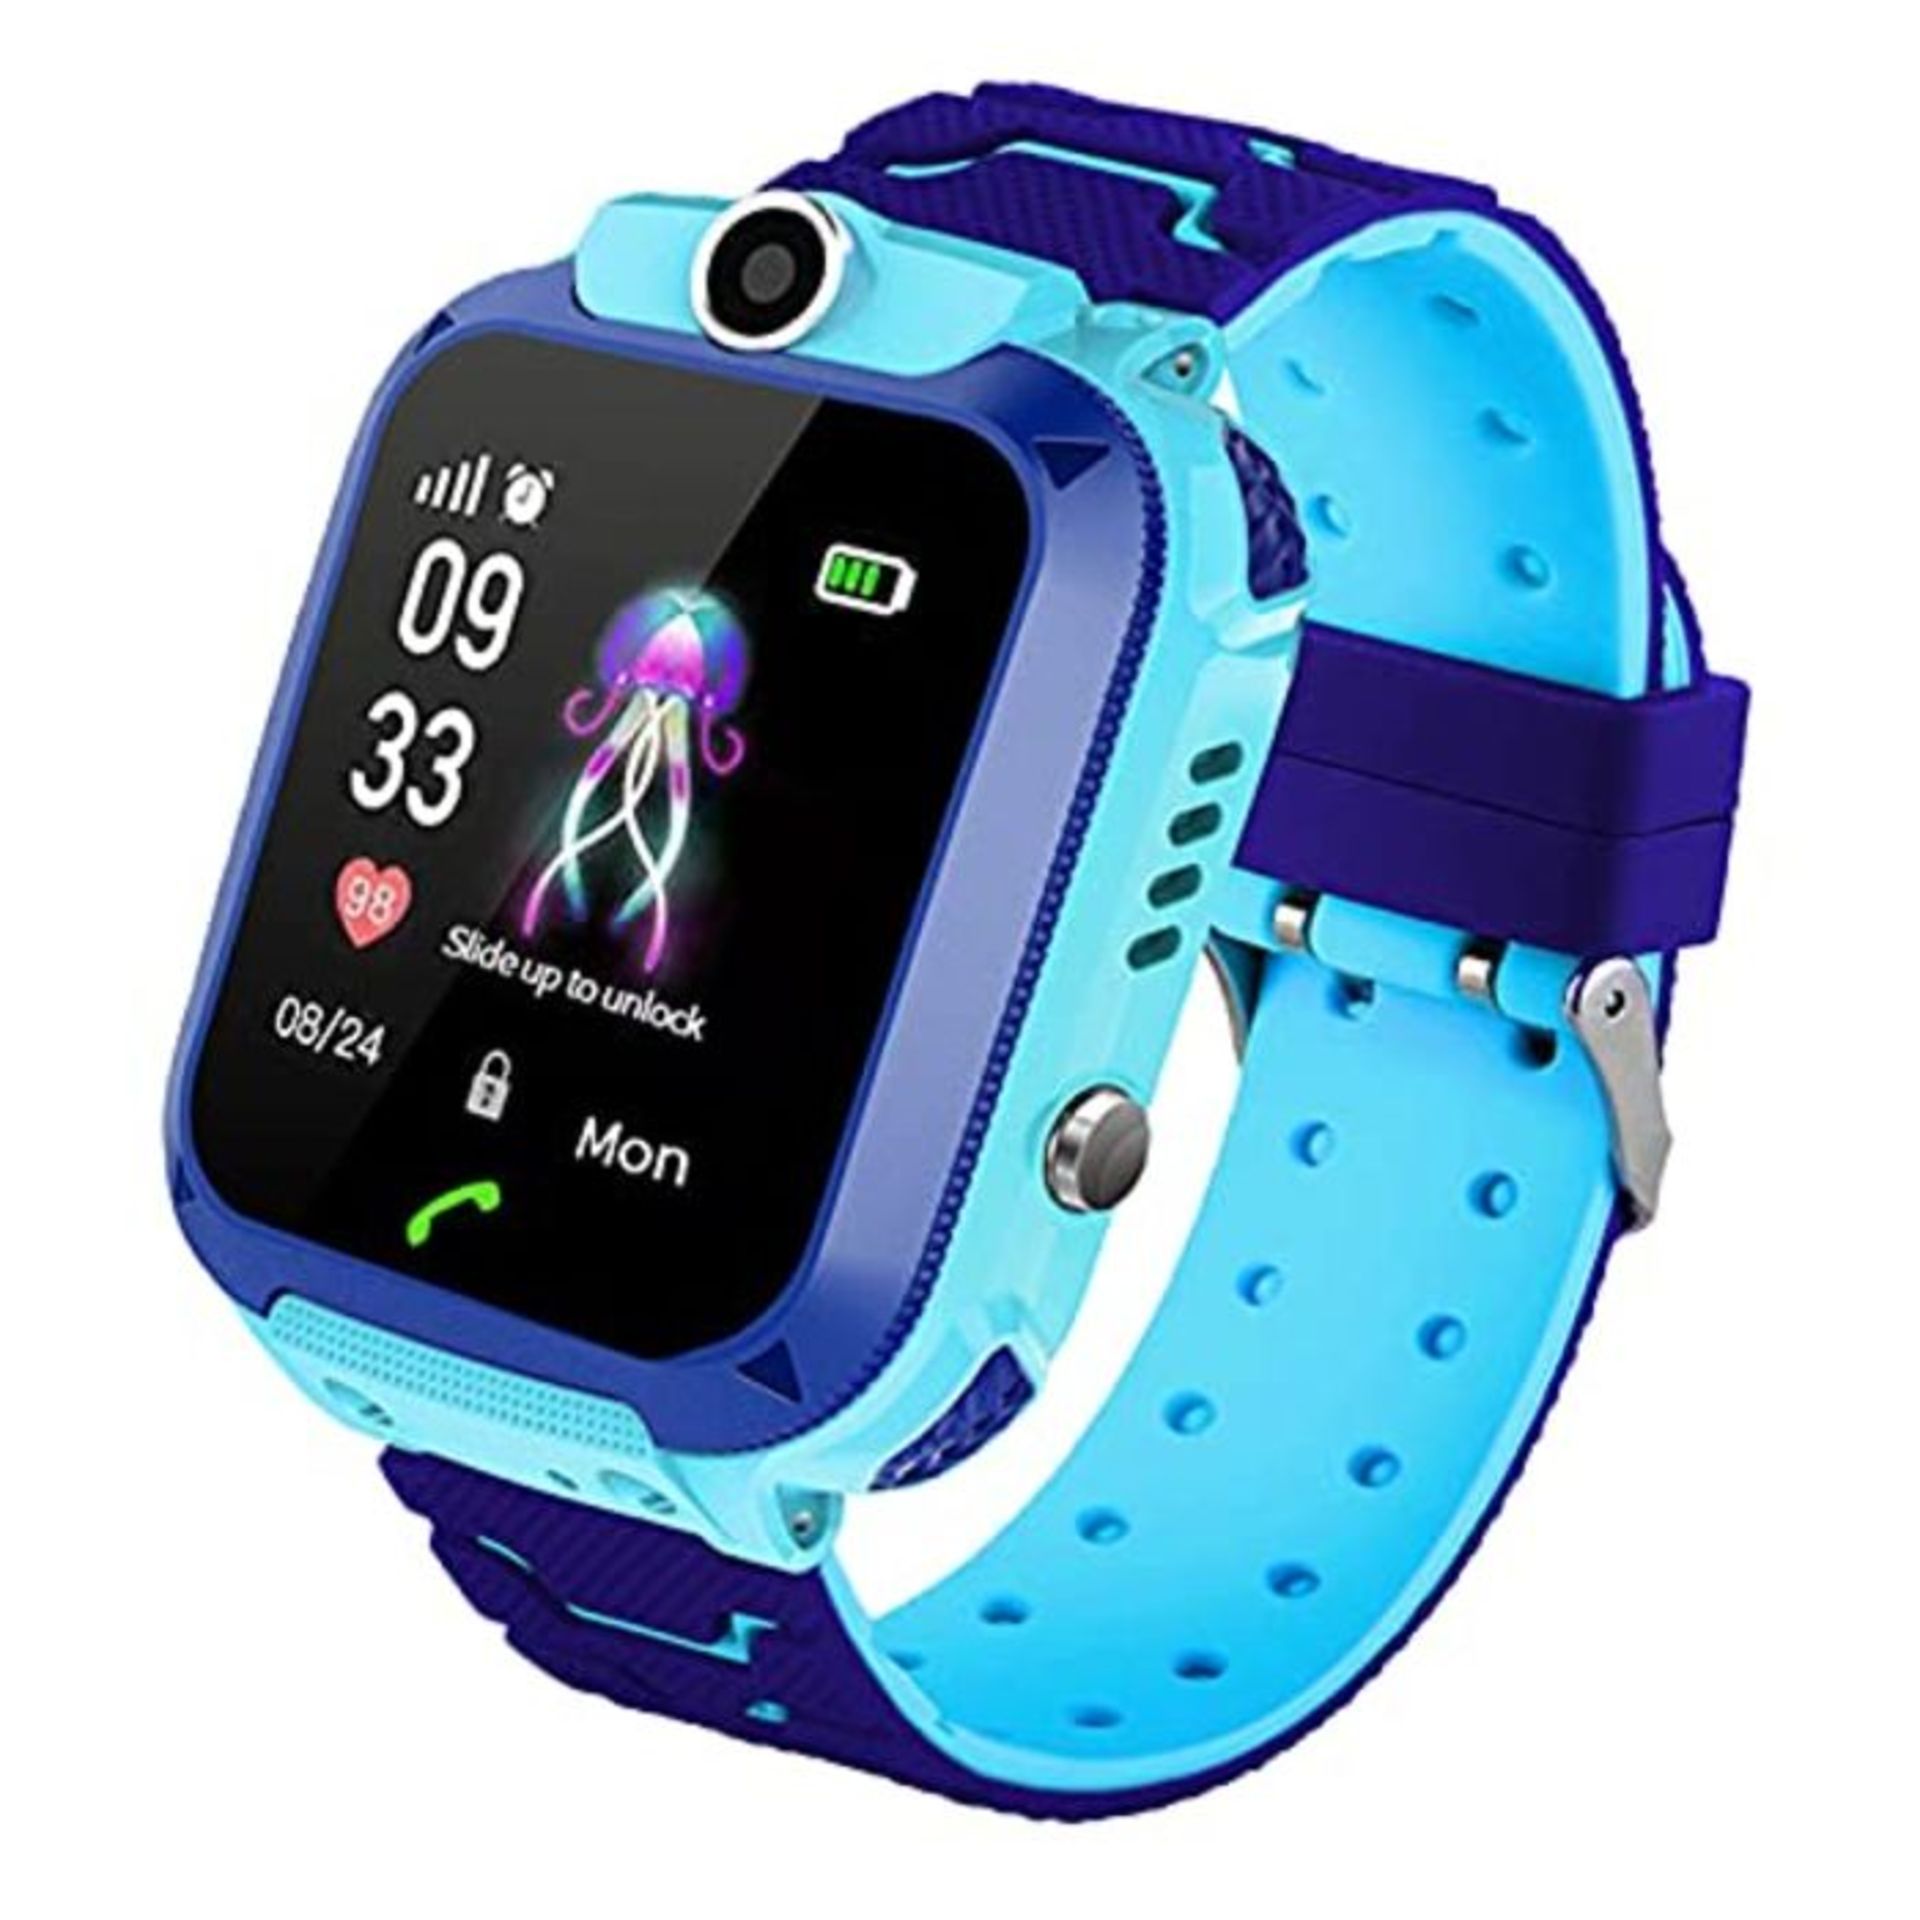 PTHTECHUS Kids Smart watch Waterproof Phone, LBS Tracker Smart Watches for Boys Girls